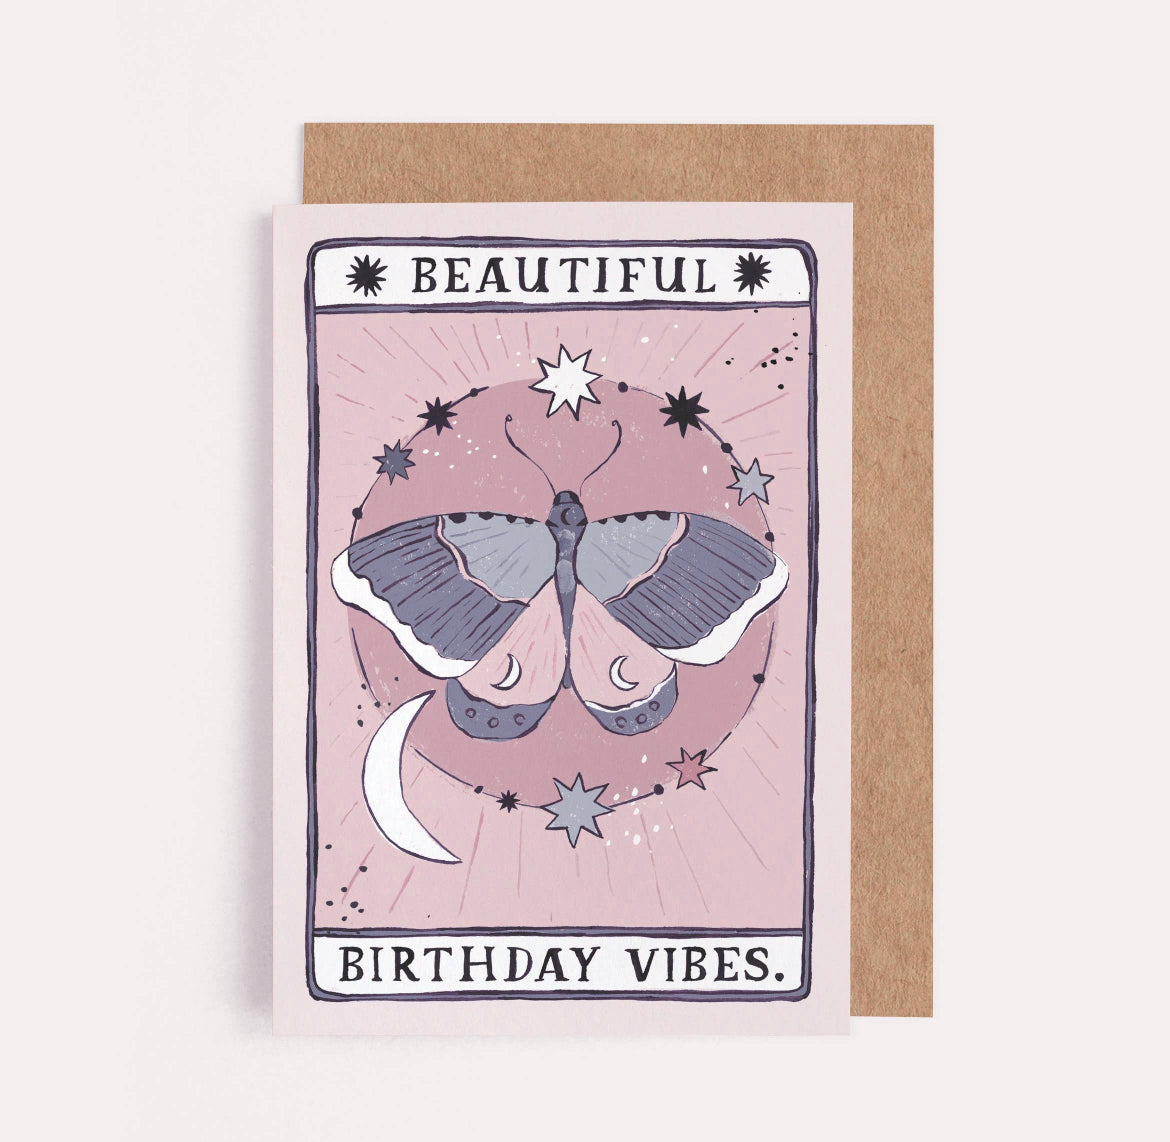 Tarot card birthday vibes card